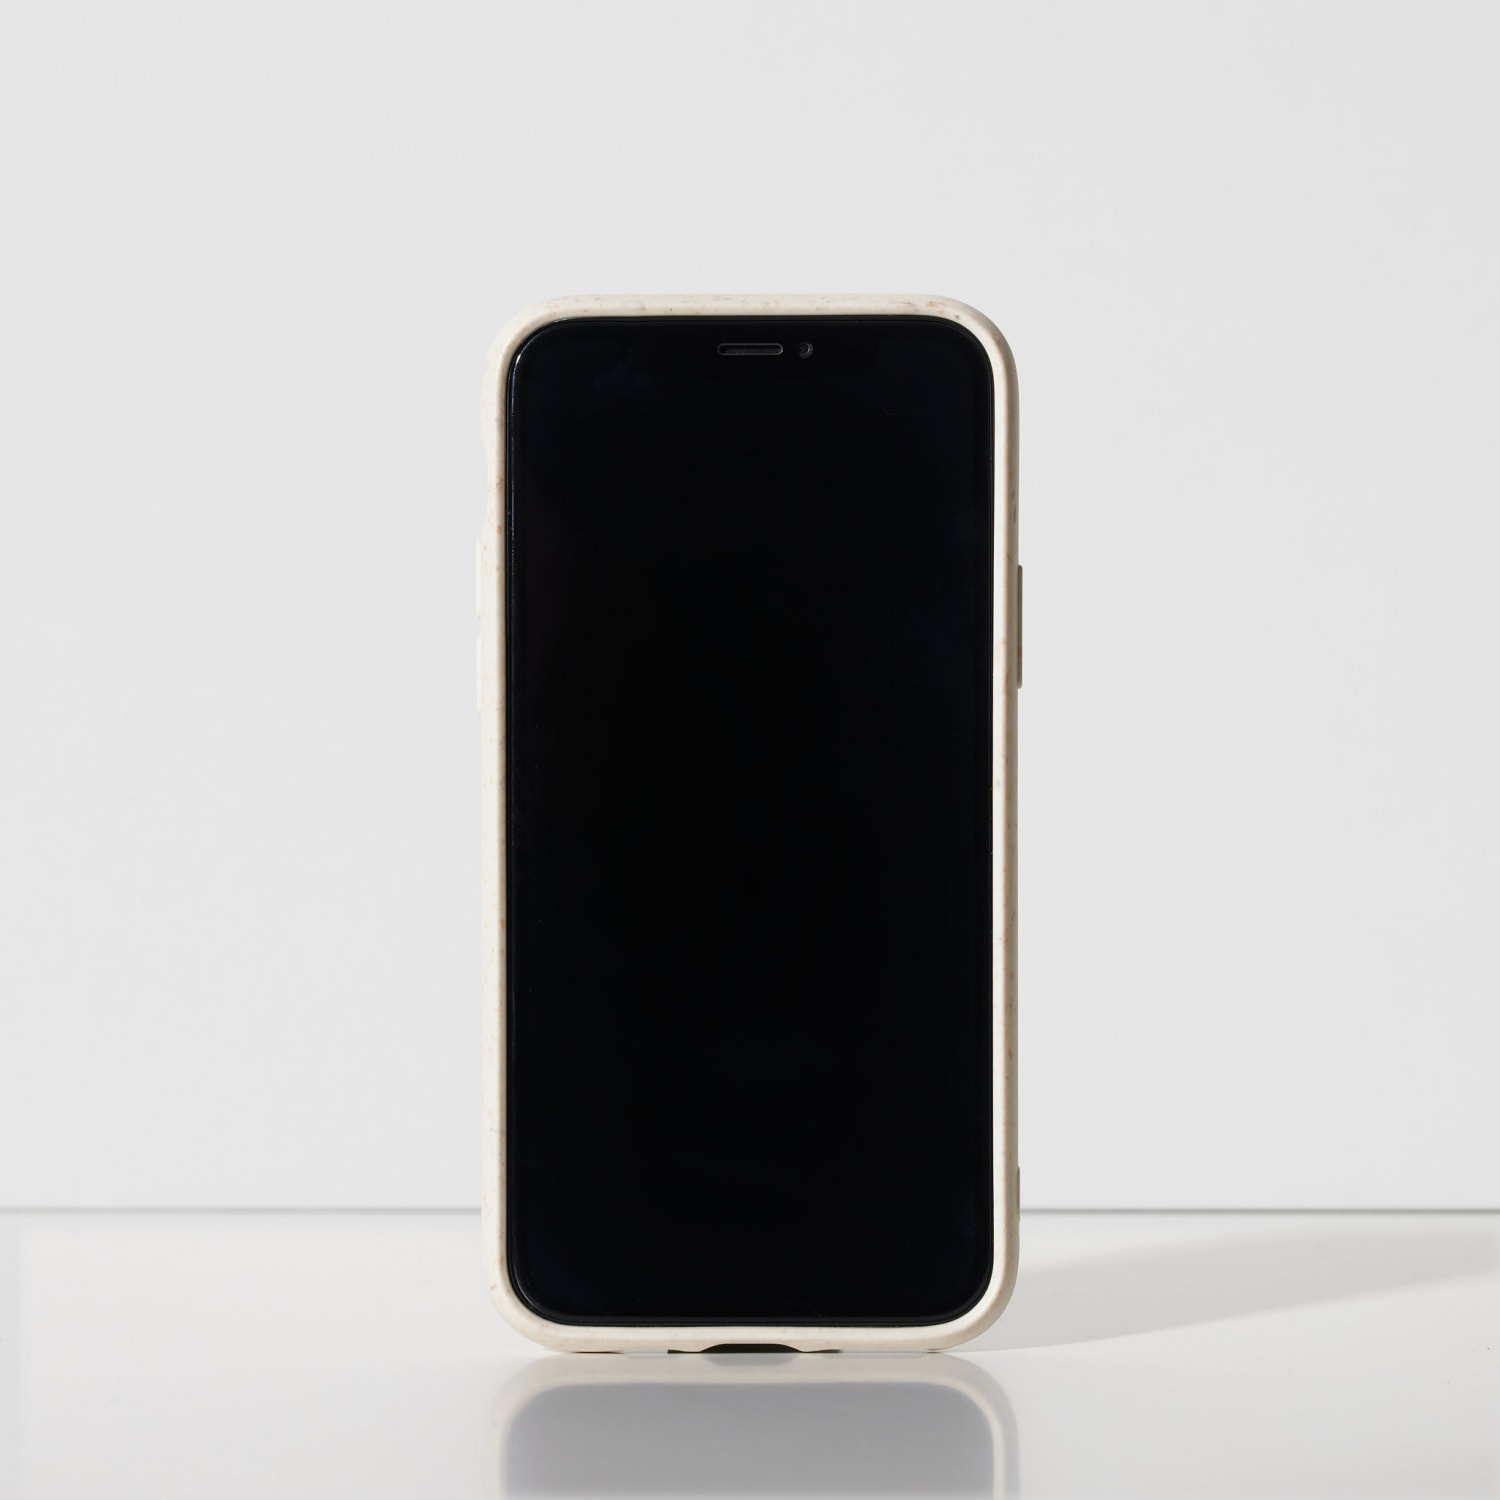 NORTVI white phone case for iPhone XR case